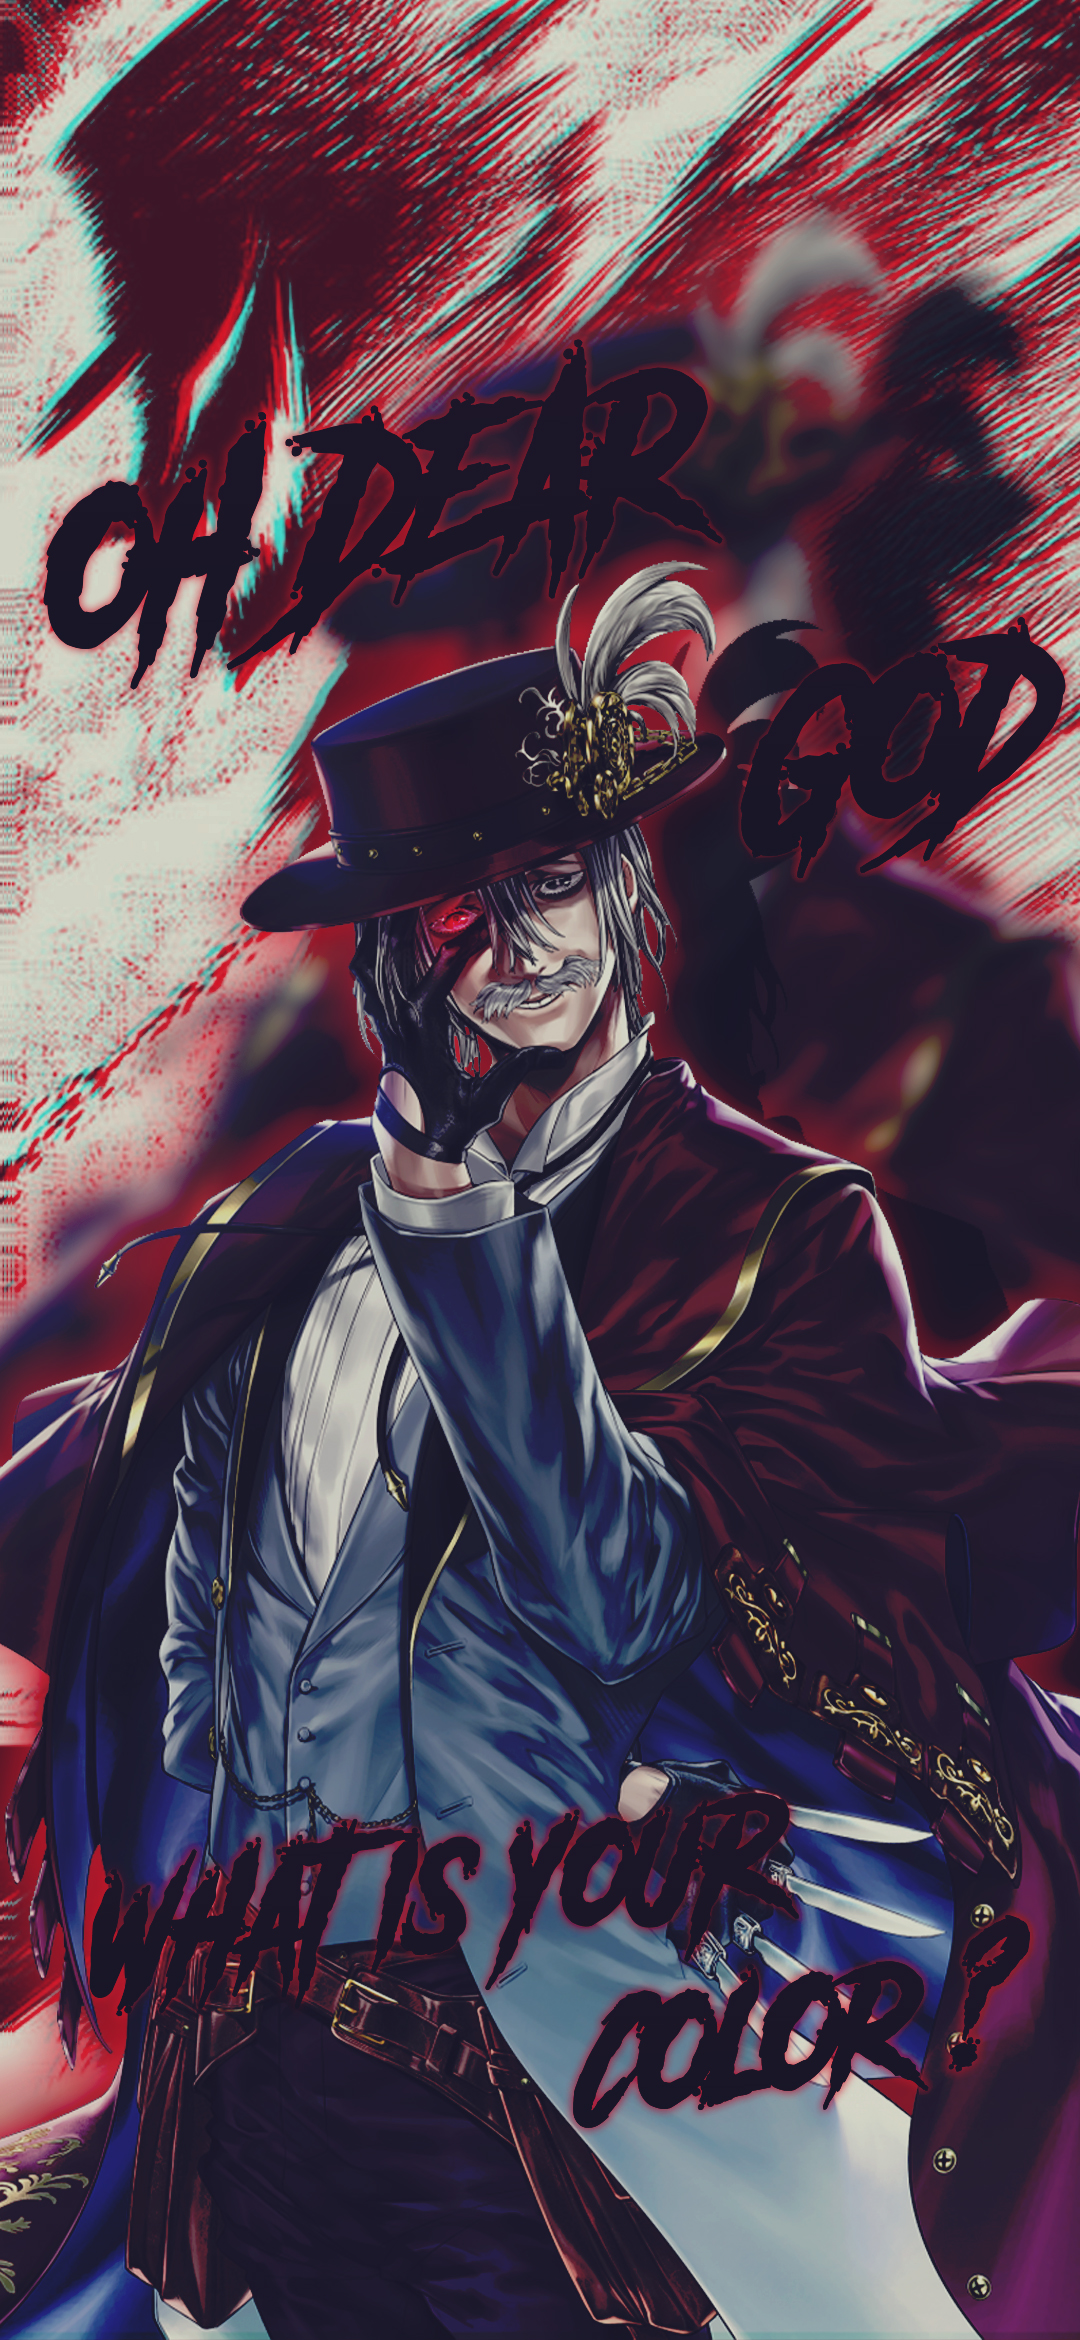 Jack the Ripper: Hell Blade (manhwa) - Anime News Network